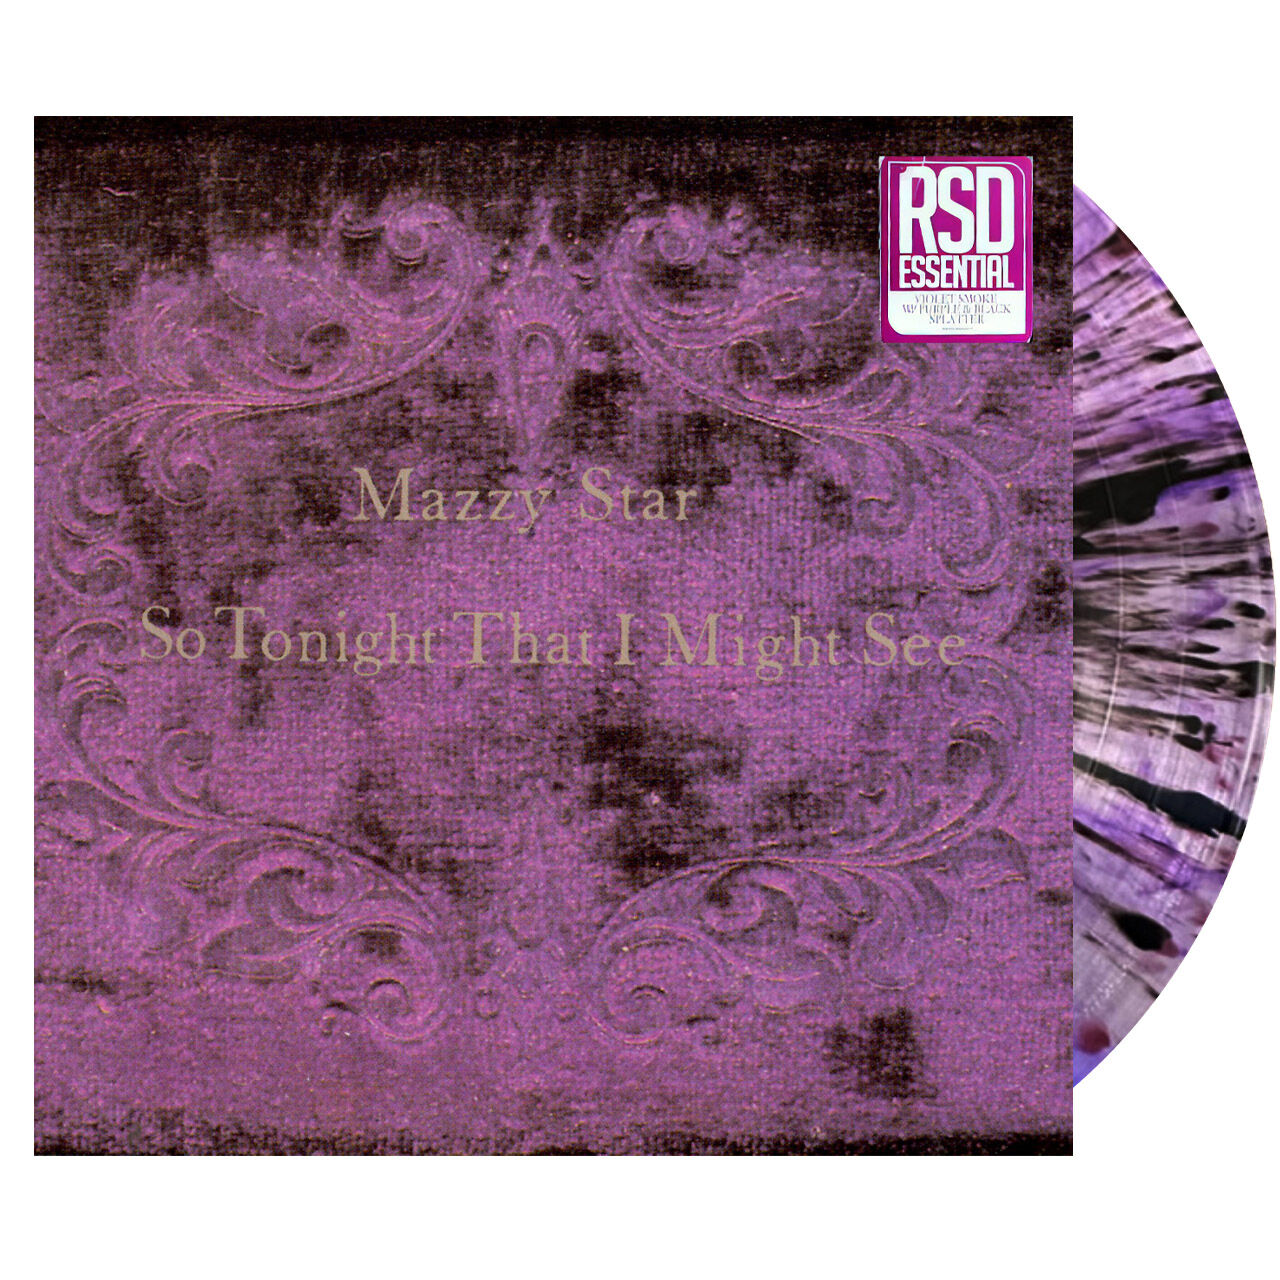 MAZZY STAR So Tonight That I Might See RSD Black Purple 1LP Vinyl